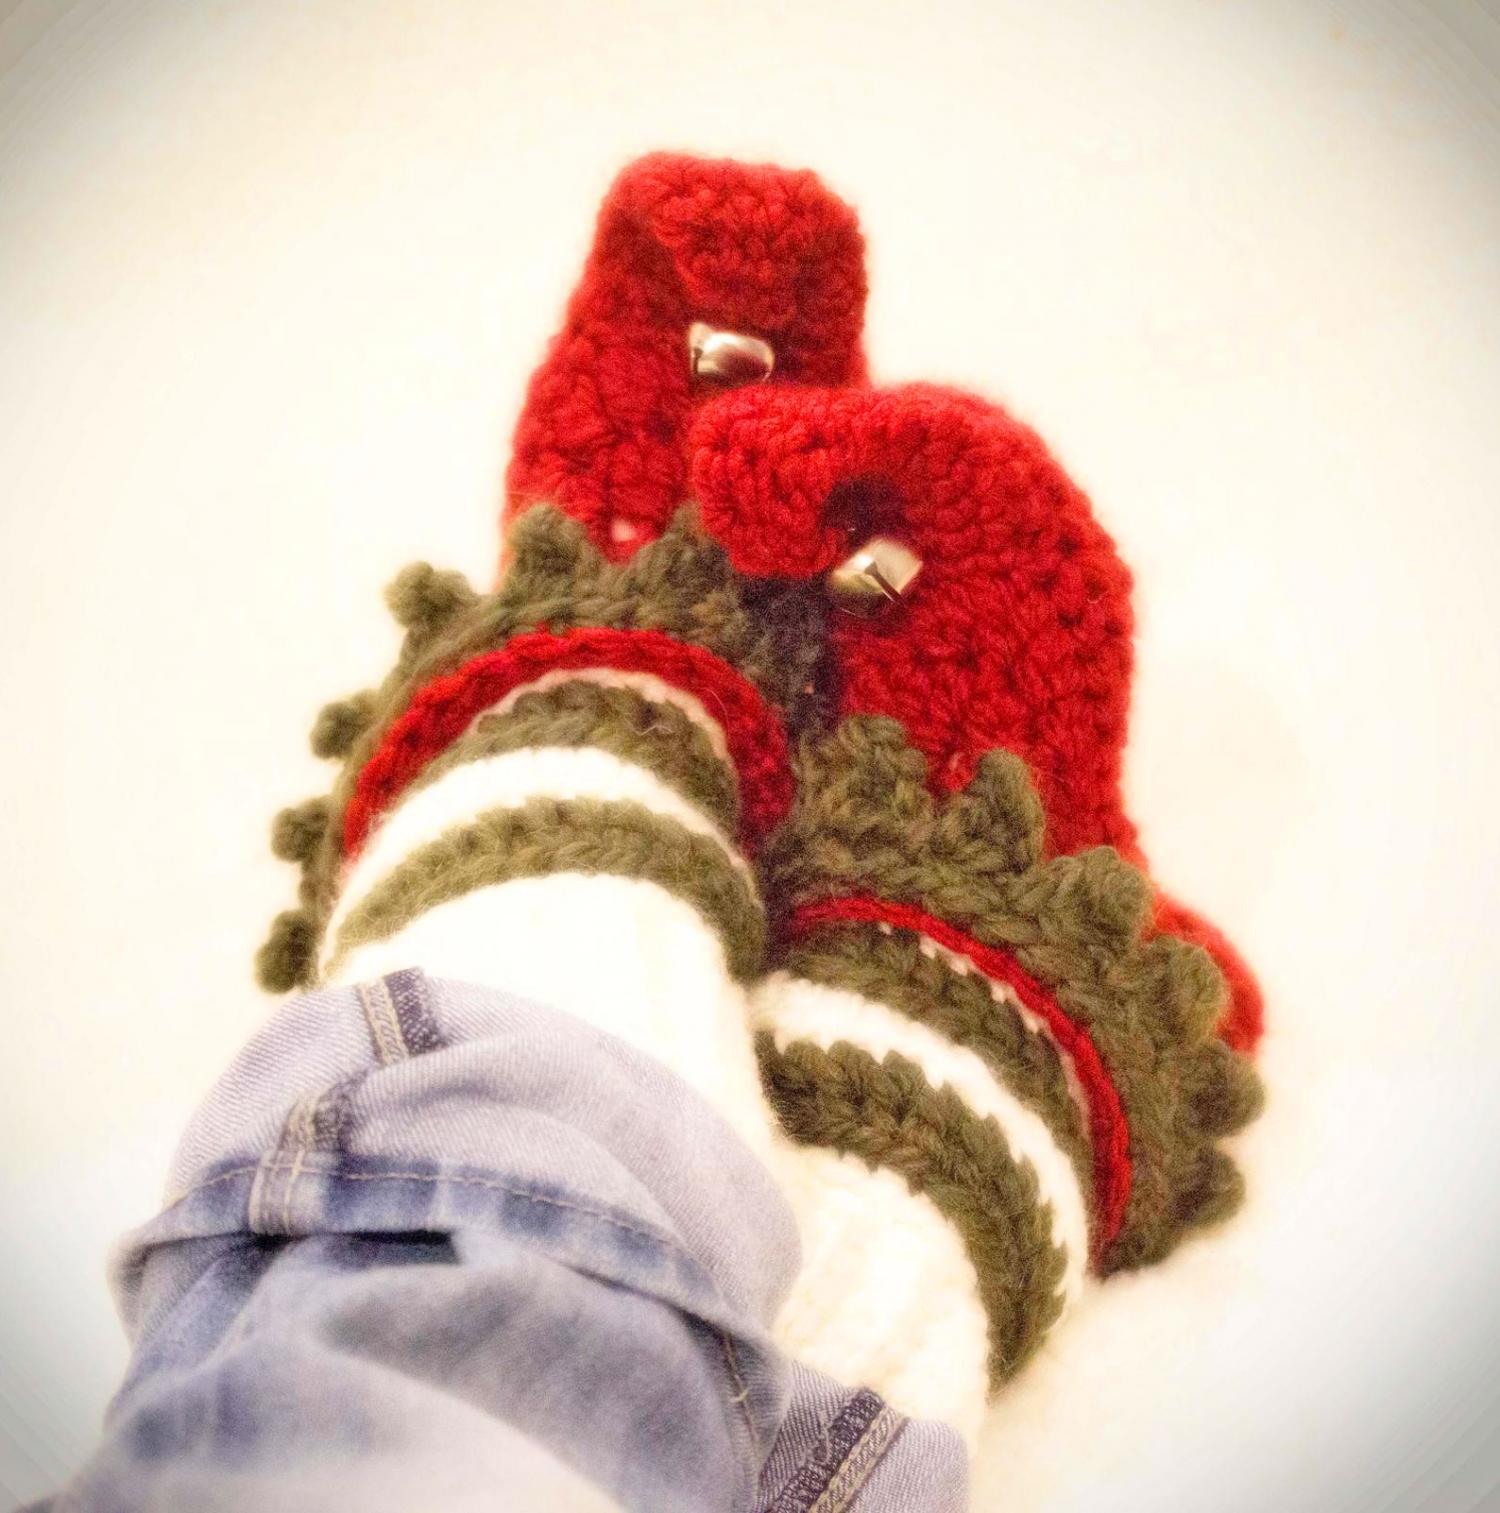 Crochet Elf Slippers - Pattern to crochet your own DIY crochet elf slippers